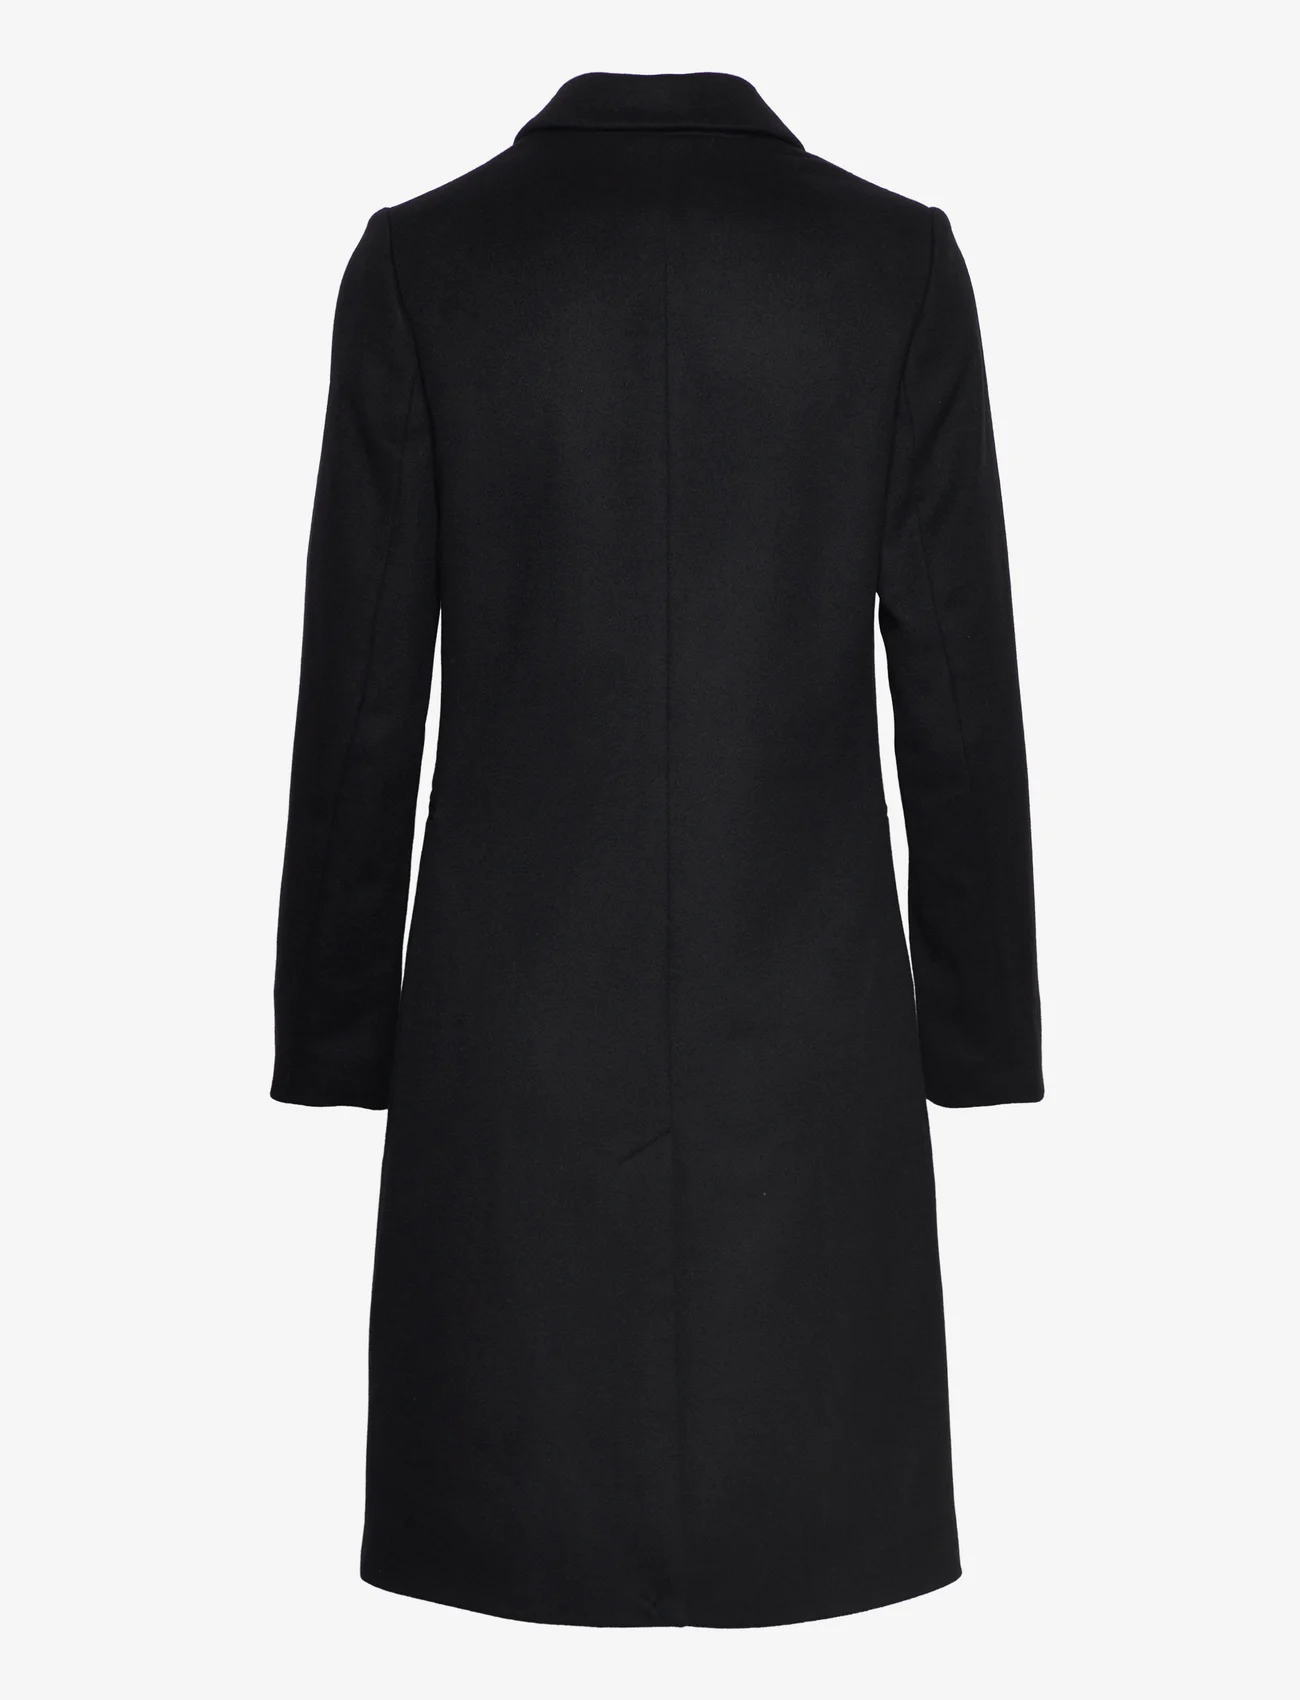 GANT - WOOL BLEND TAILORED COAT - winter coats - ebony black - 1